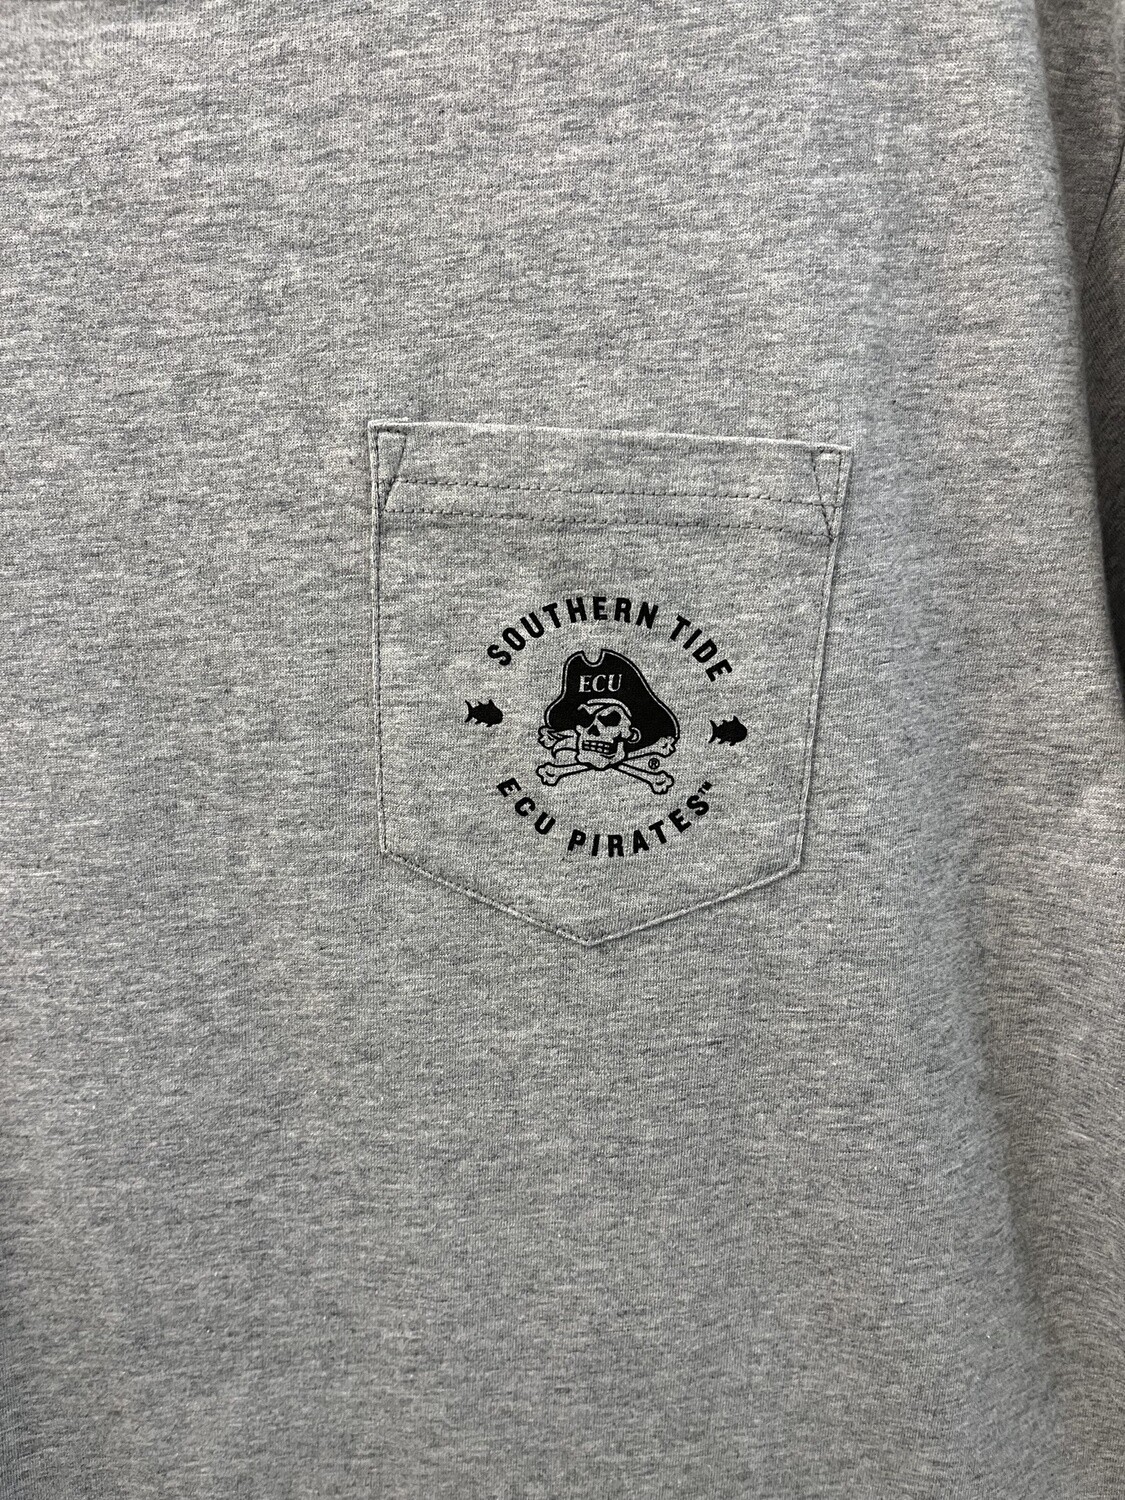 Southern Tide ECU Pirates T-Shirt, Size: Medium